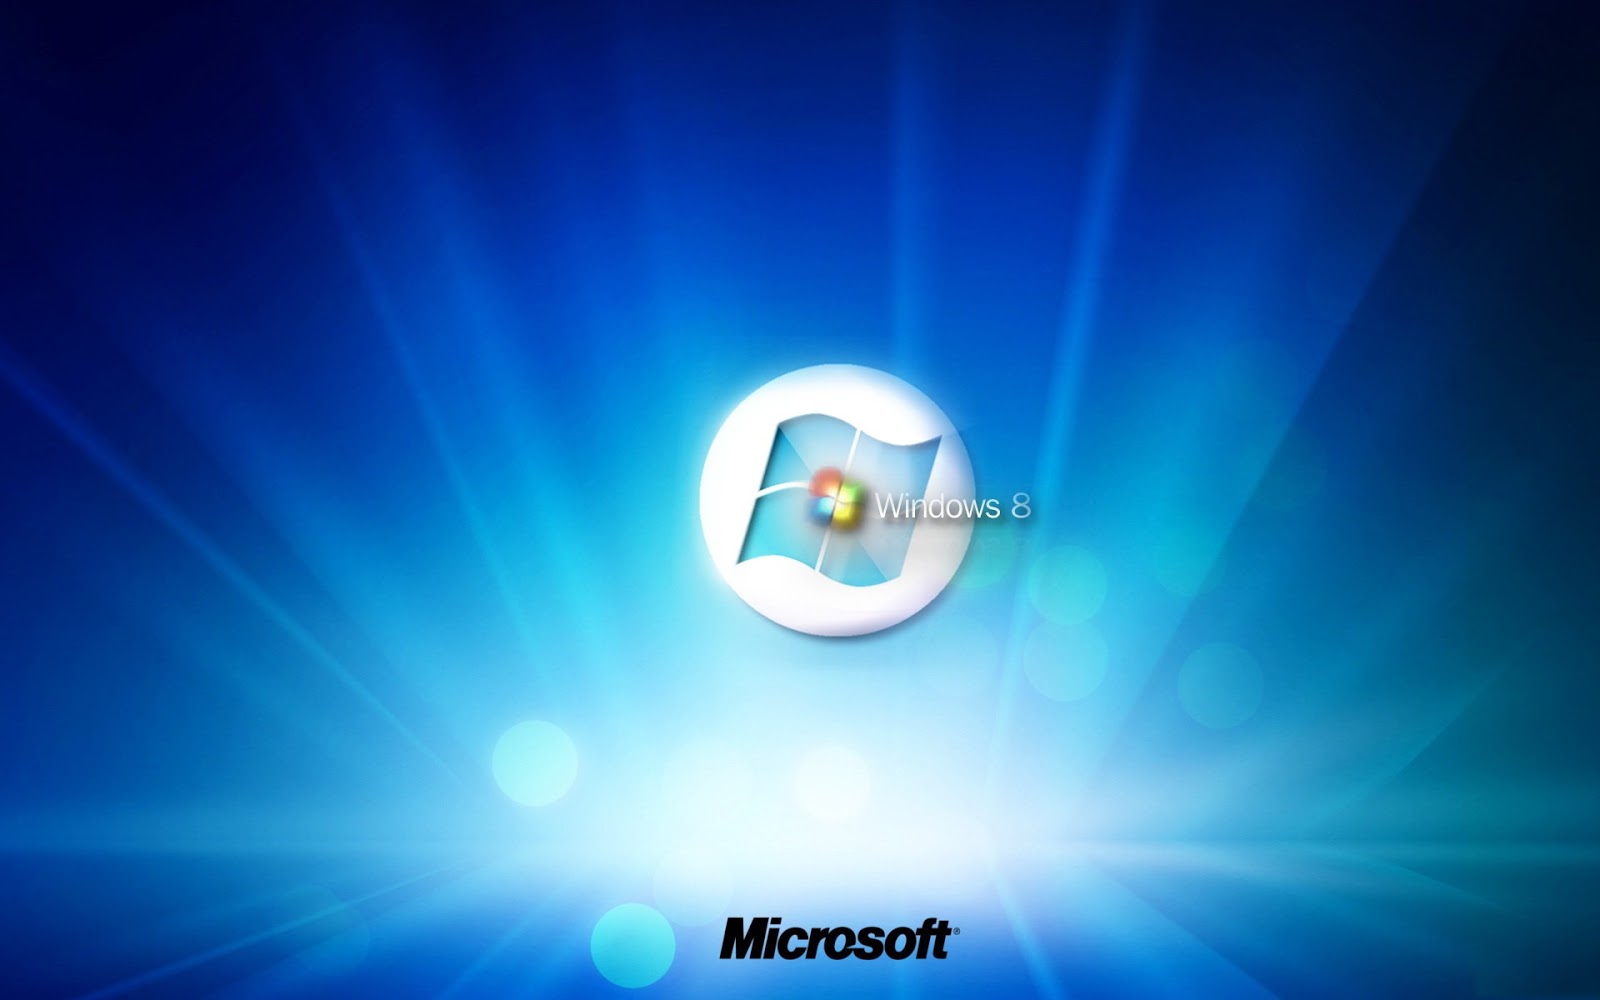 HD Windows 8 Wallpaper | Windows Backgrounds Wallpaper